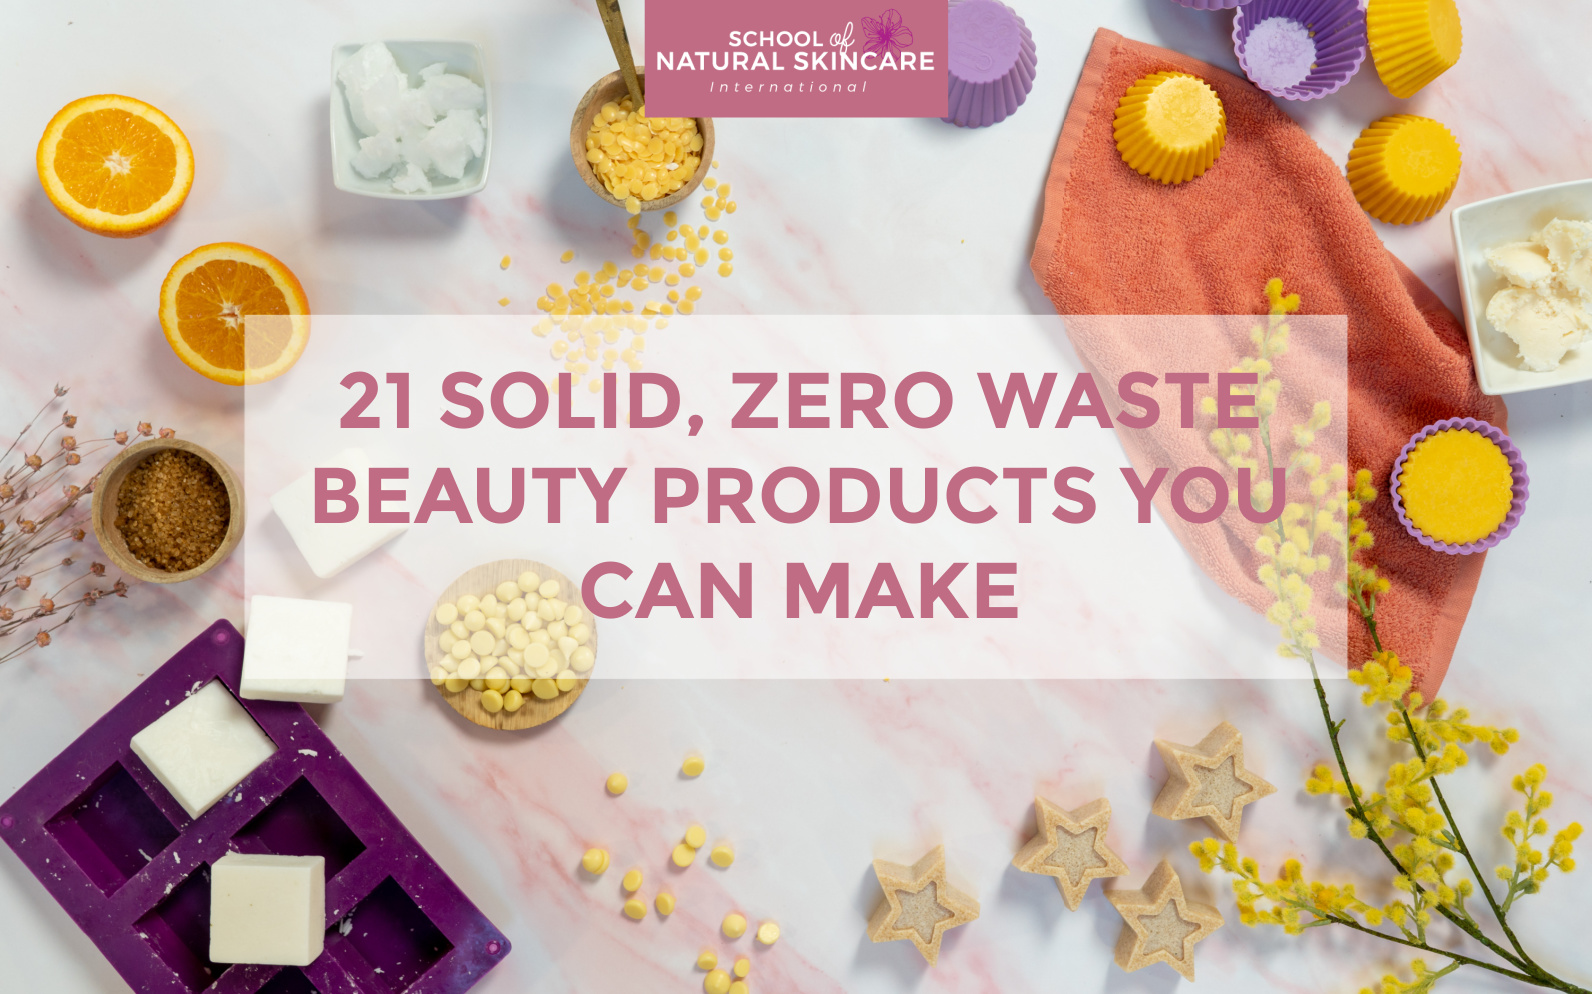 How to make sugar scrub bars + body scrub bar recipe Zero Waste Formulation 